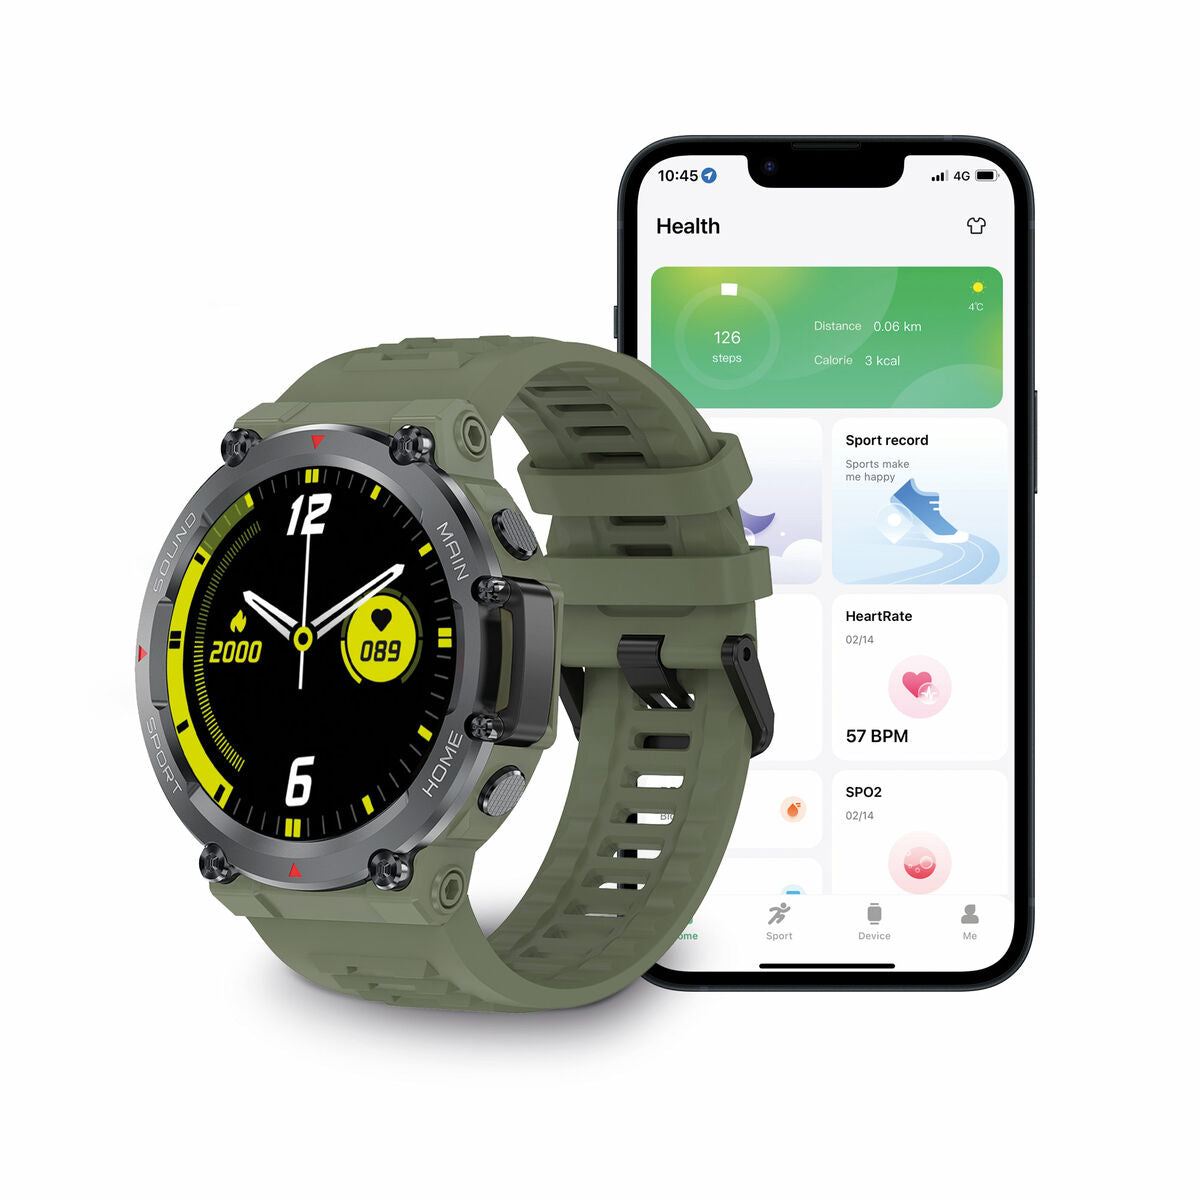 Kaufe Smartwatch KSIX Oslo 1,5" Bluetooth 5.0 270 mAh grün bei AWK Flagship um € 57.00